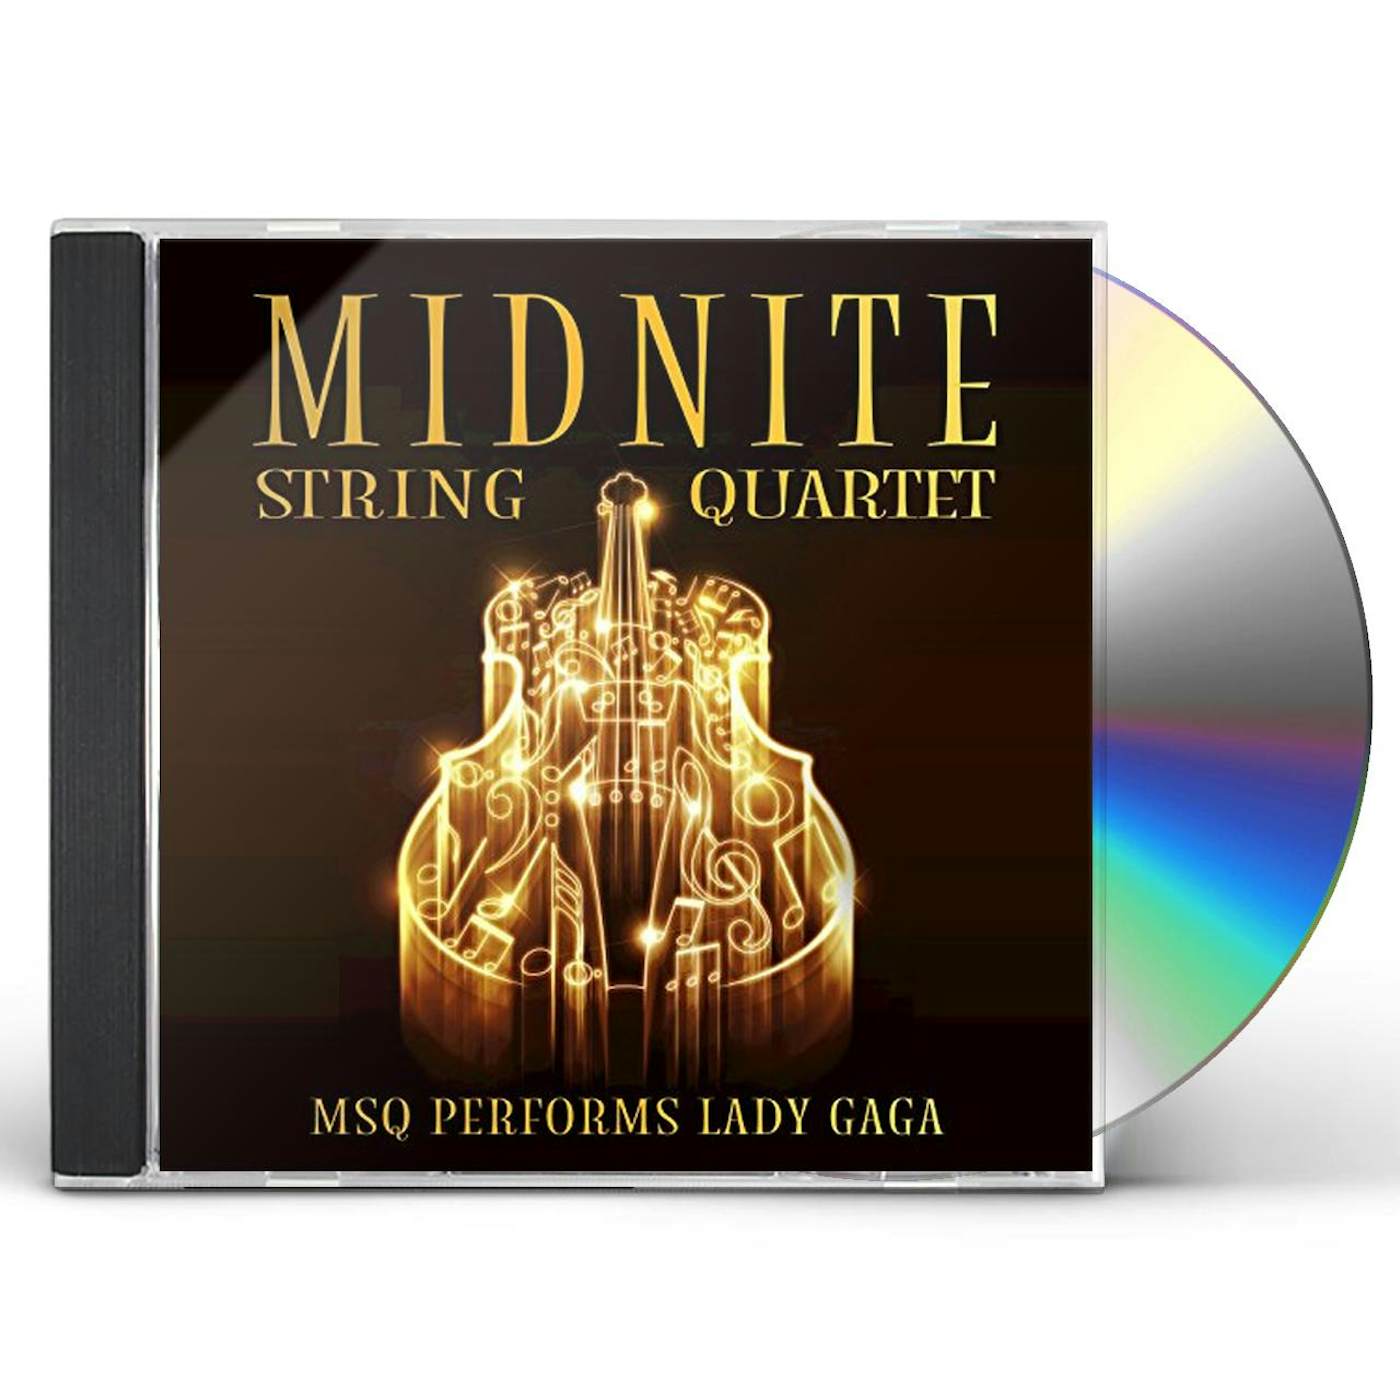 Midnite String Quartet MSQ PERFORMS LADY GAGA (MOD) CD